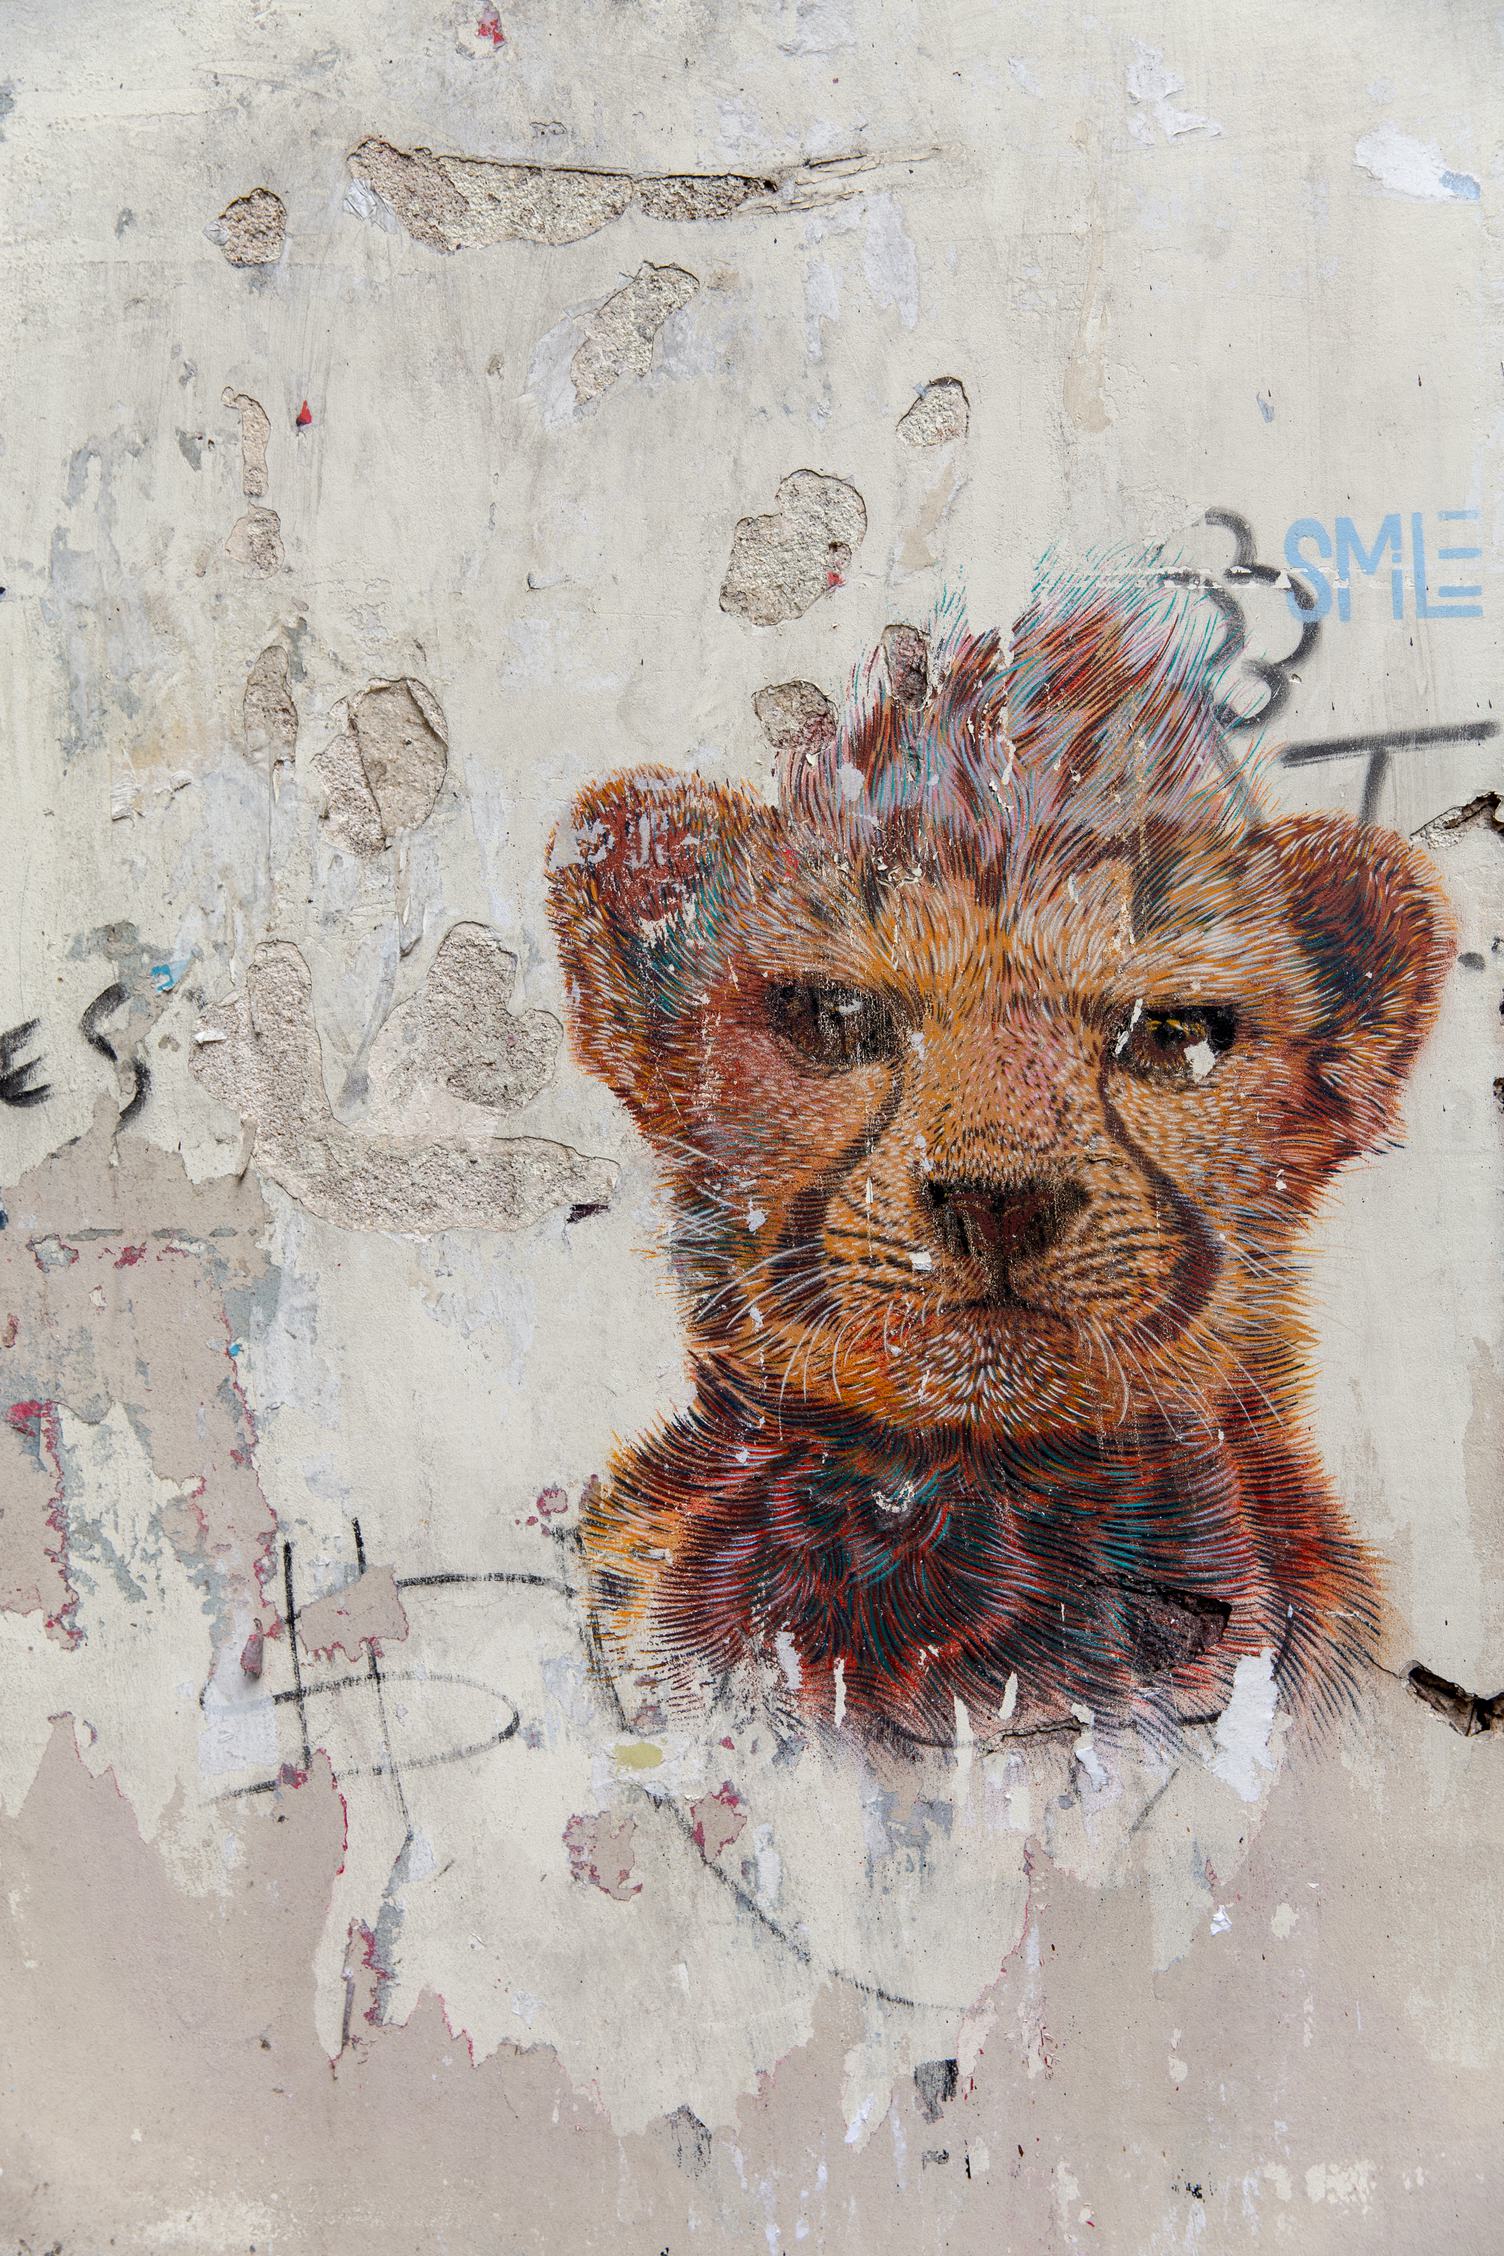 Grunge Wall with Tiger Graffiti